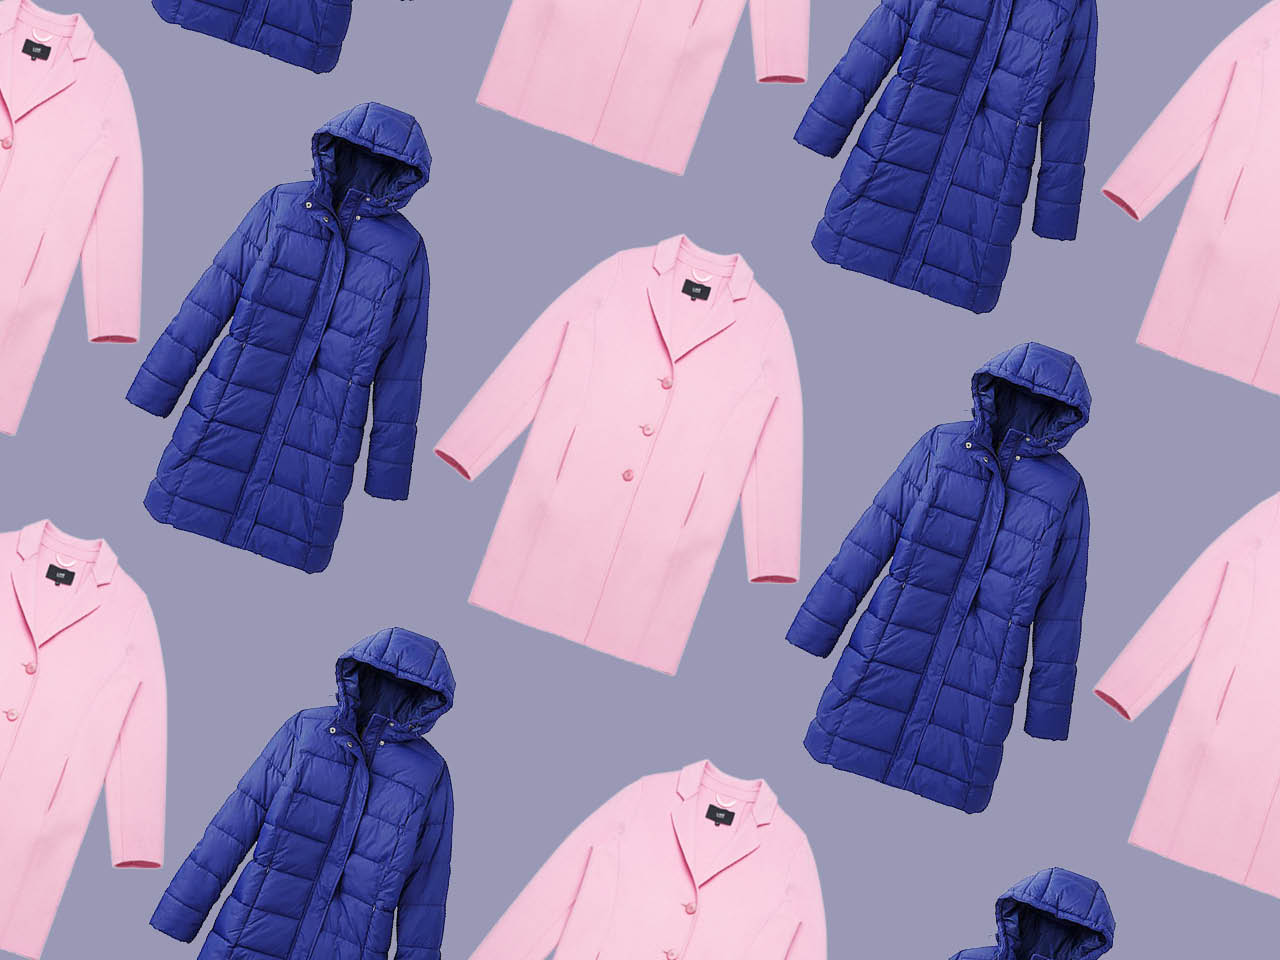 DeLamode Men Winter Add Cotton Coat Warm Colorful Down Zipper Snow Weather Jacket